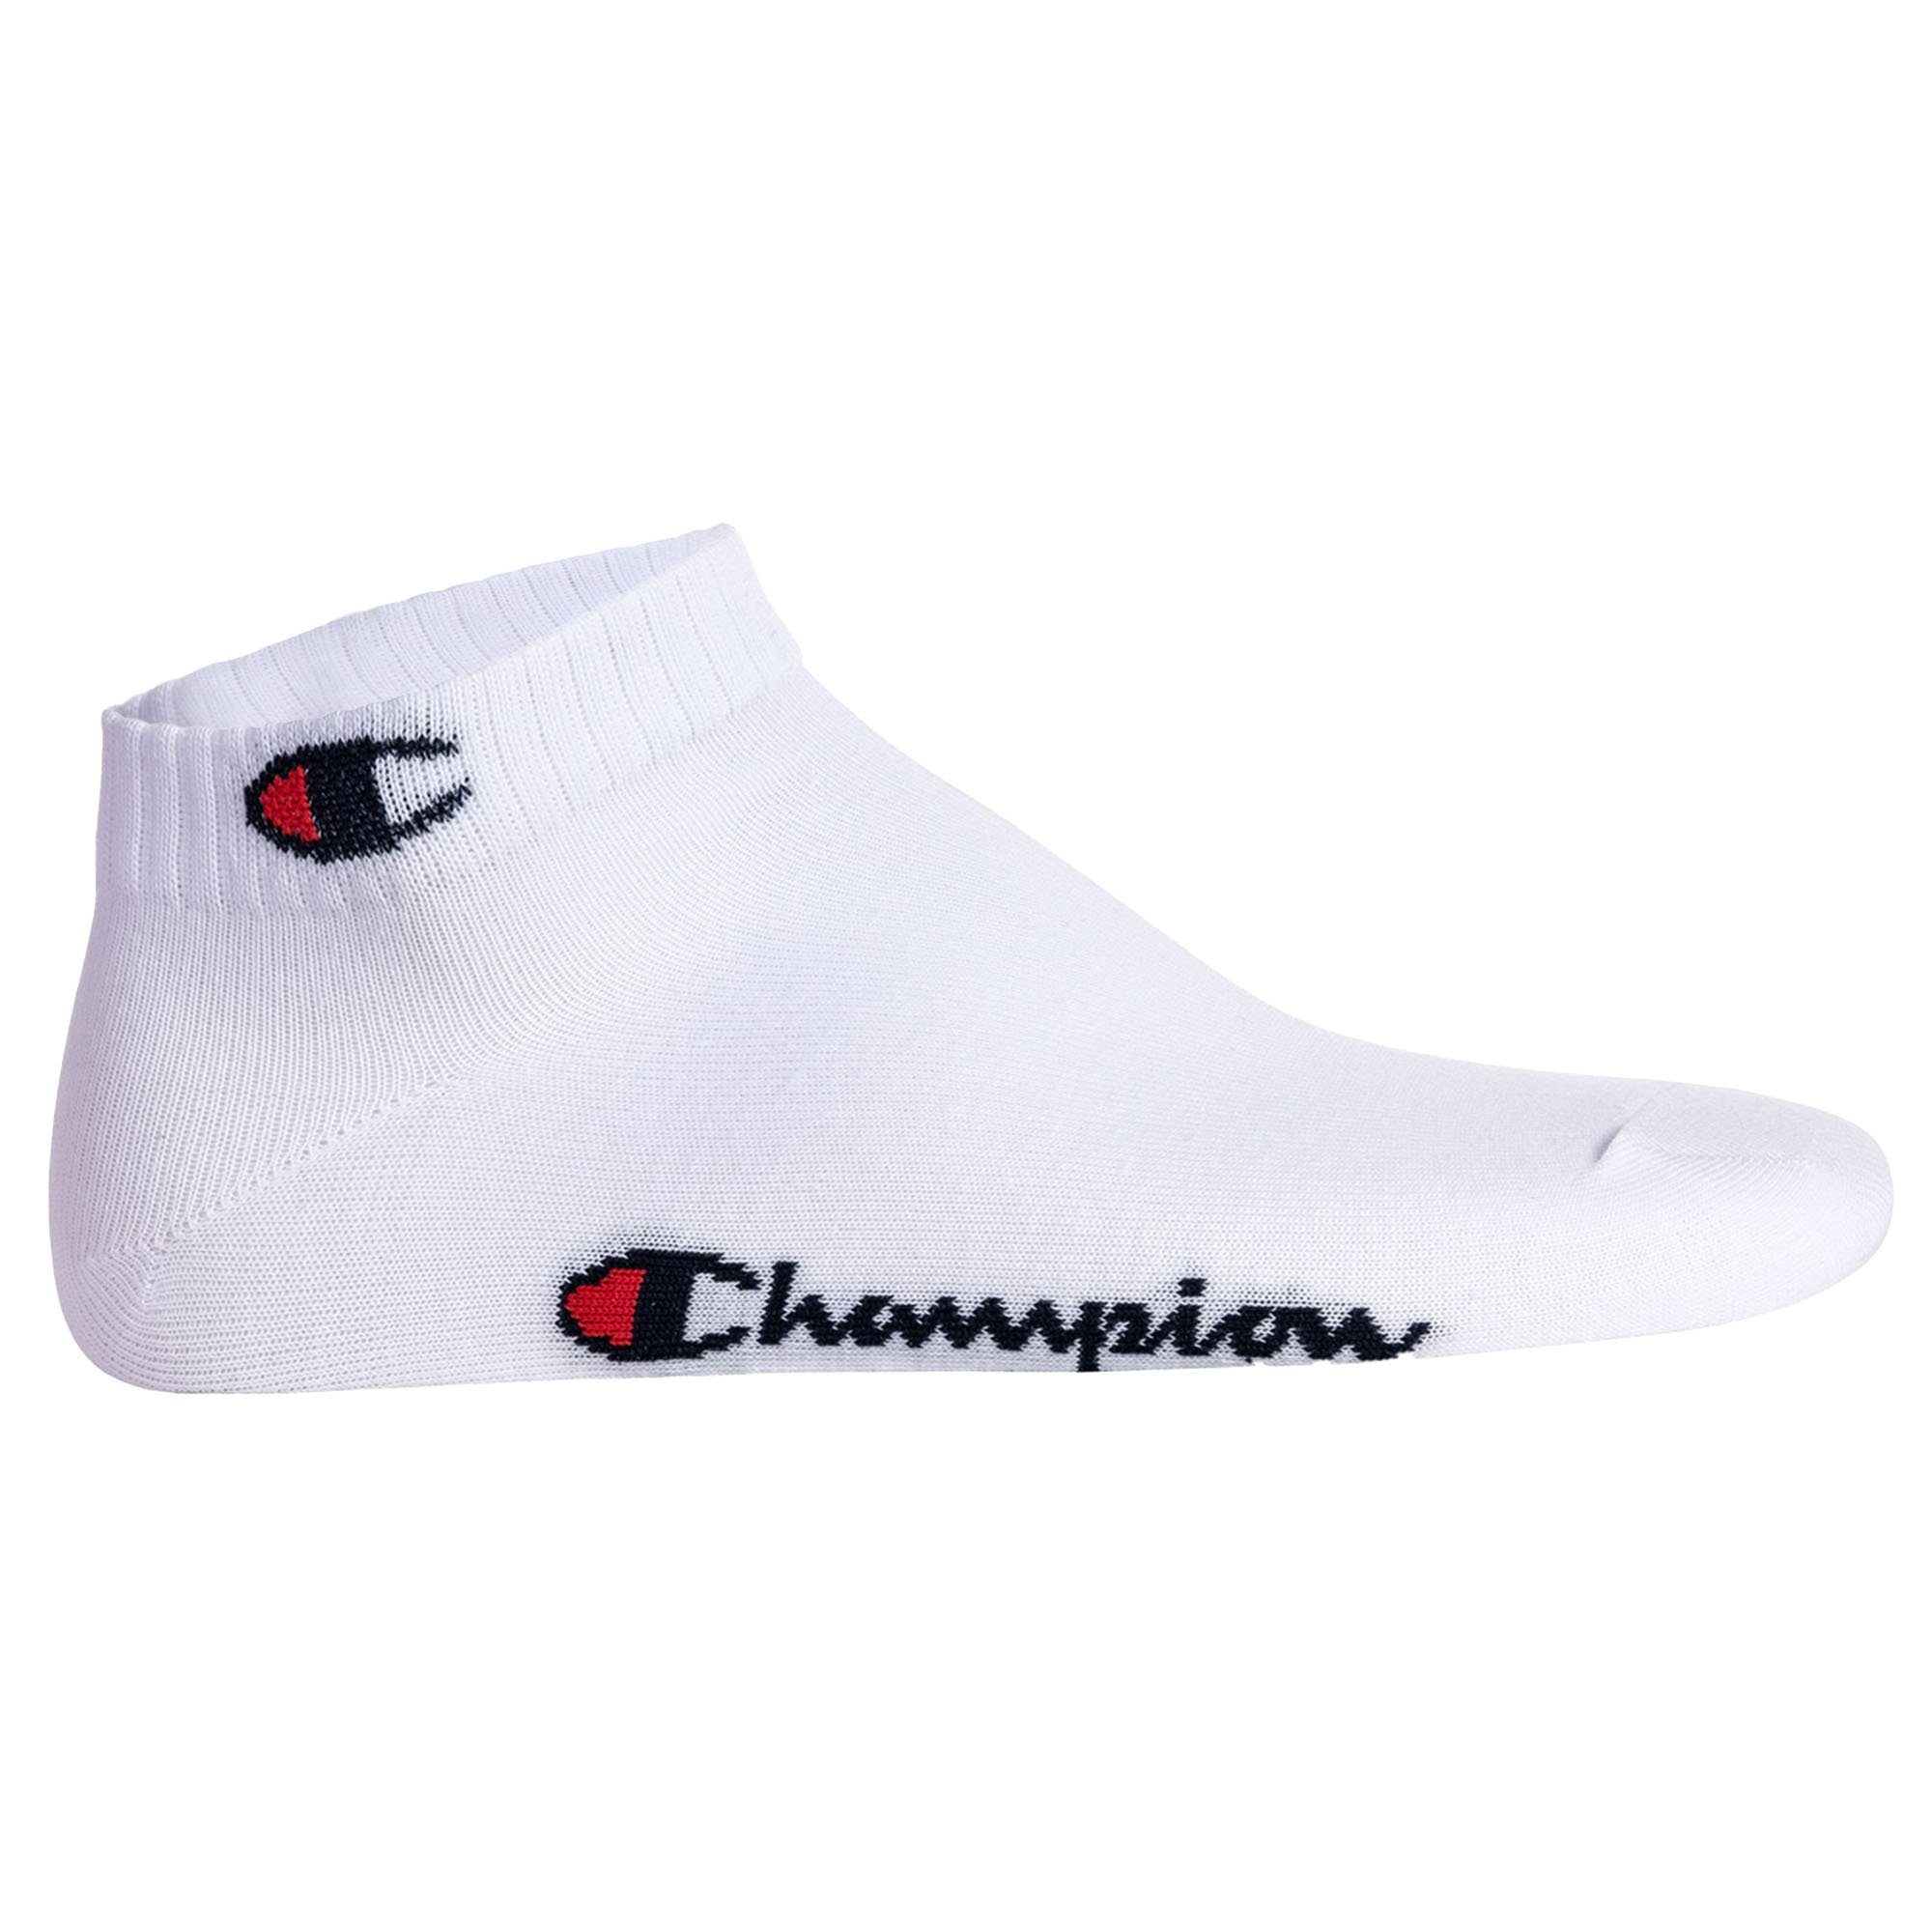 6 - Weiß Unisex Paar Socken, Sportsocken Basic Socken Crew Champion